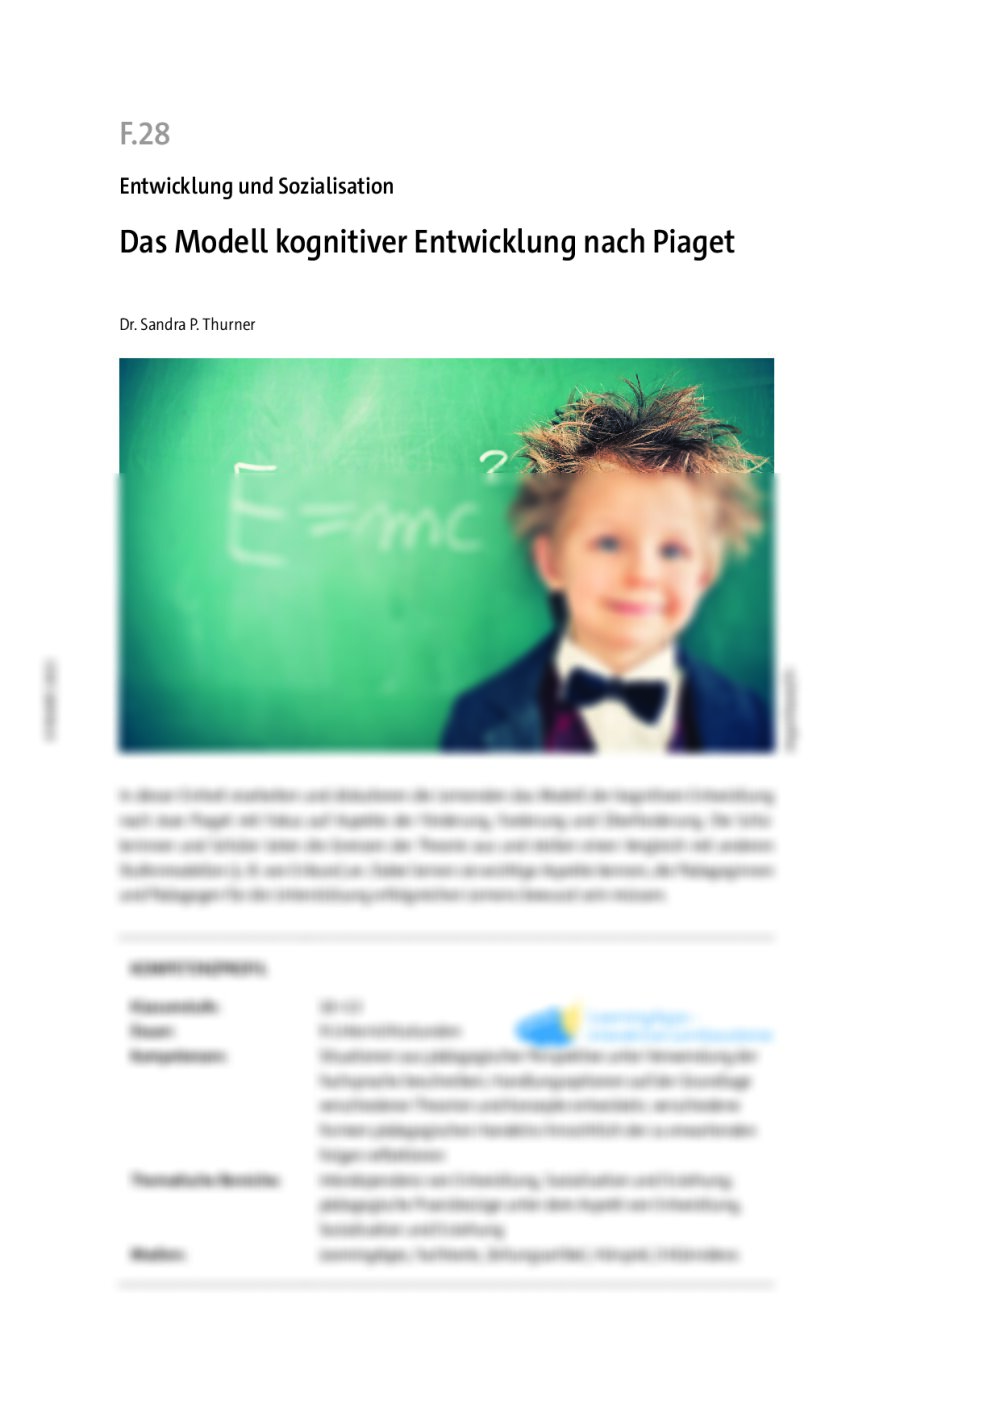 Das Modell kognitiver Entwicklung nach Piaget - Seite 1